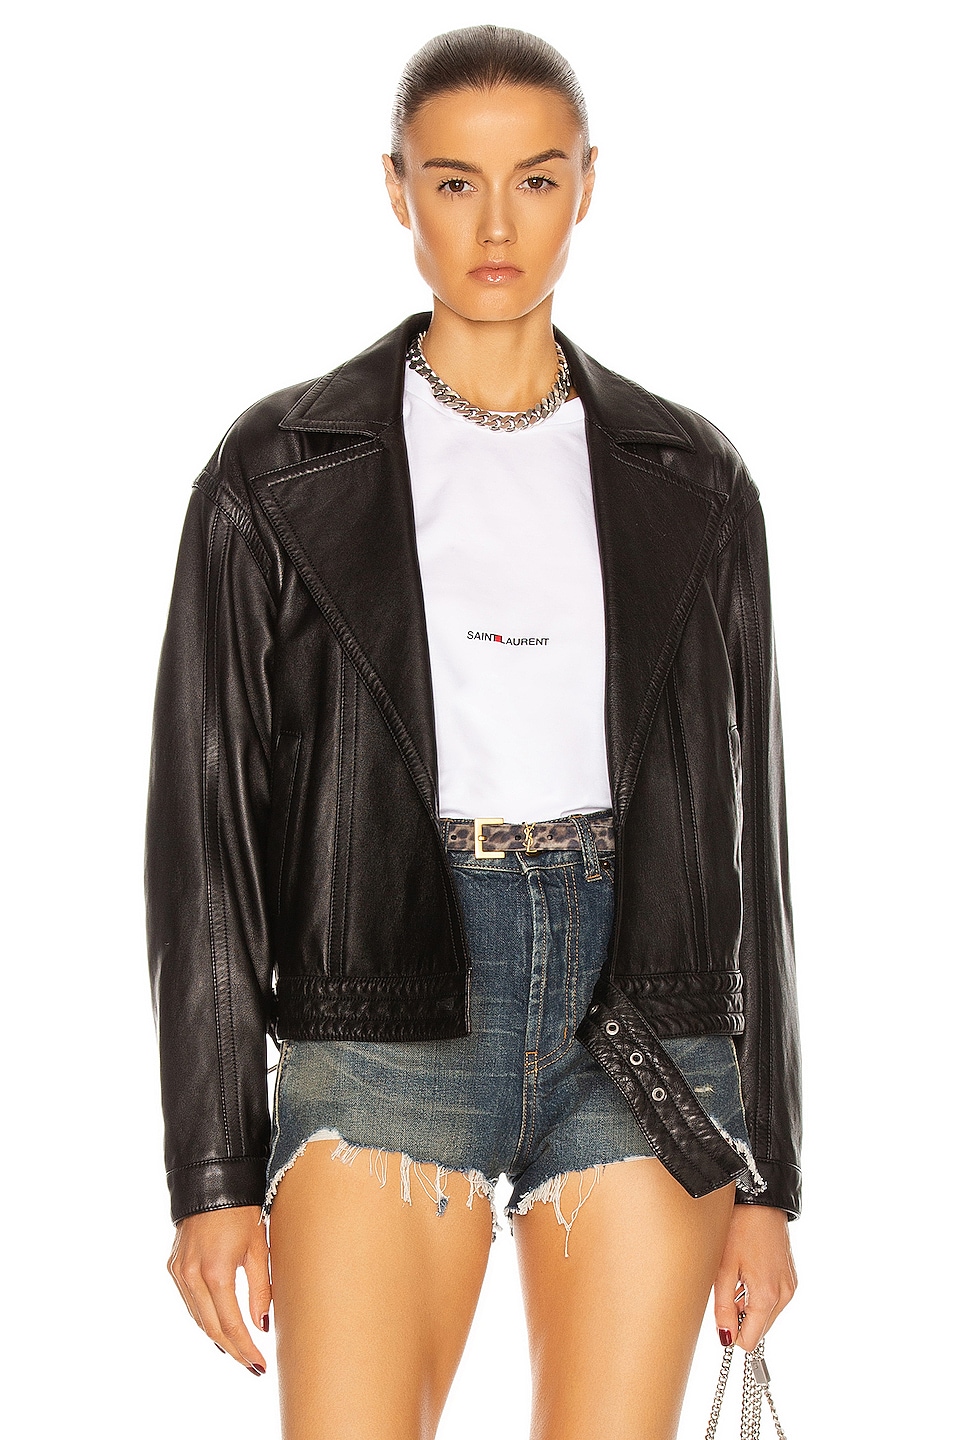 Saint Laurent Oversize Leather Jacket in Noir | FWRD